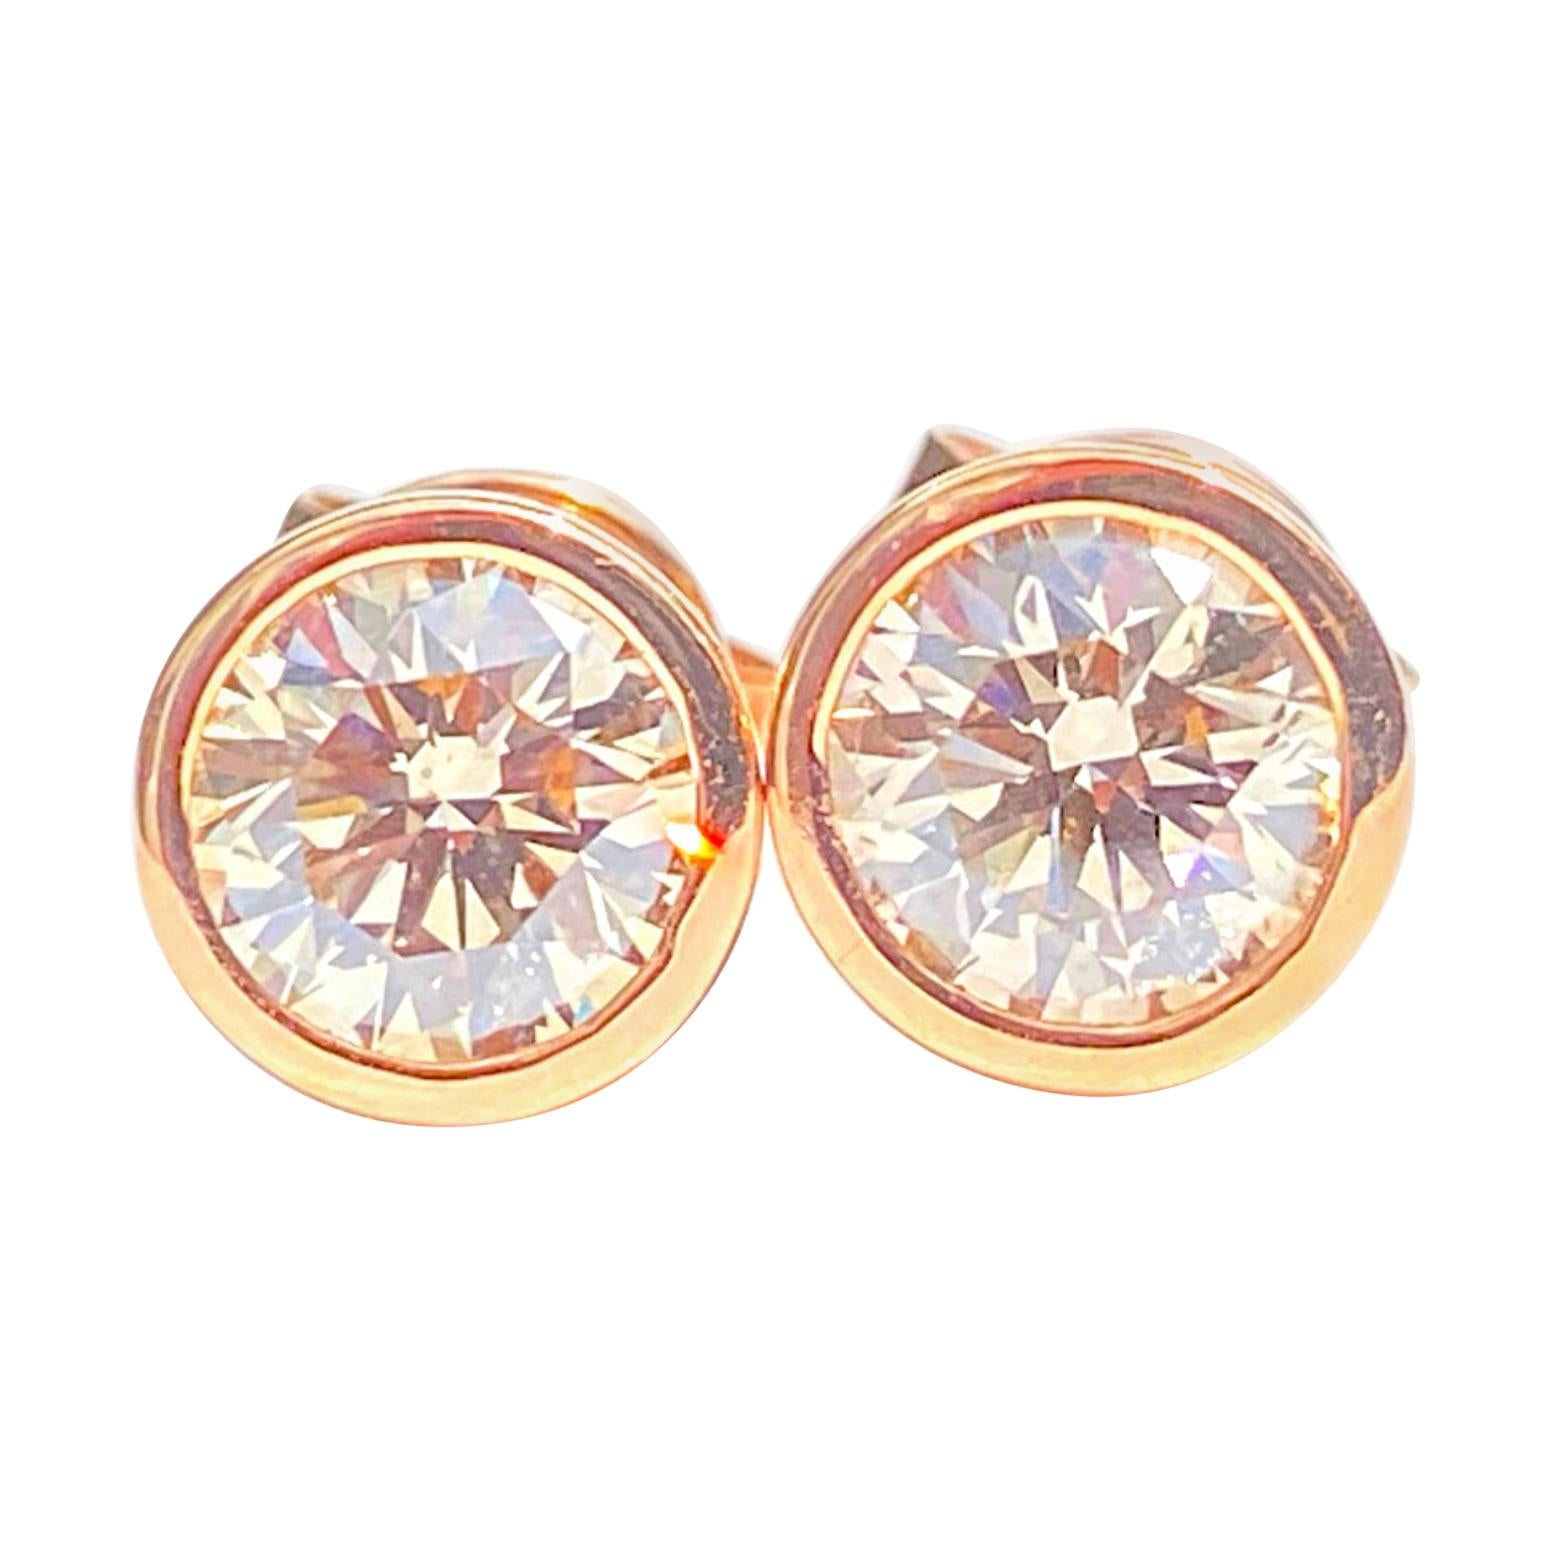 1.58 Carat Diamond and 18k Rose Gold Stud Earrings Round-Brilliant Cut Diamonds For Sale